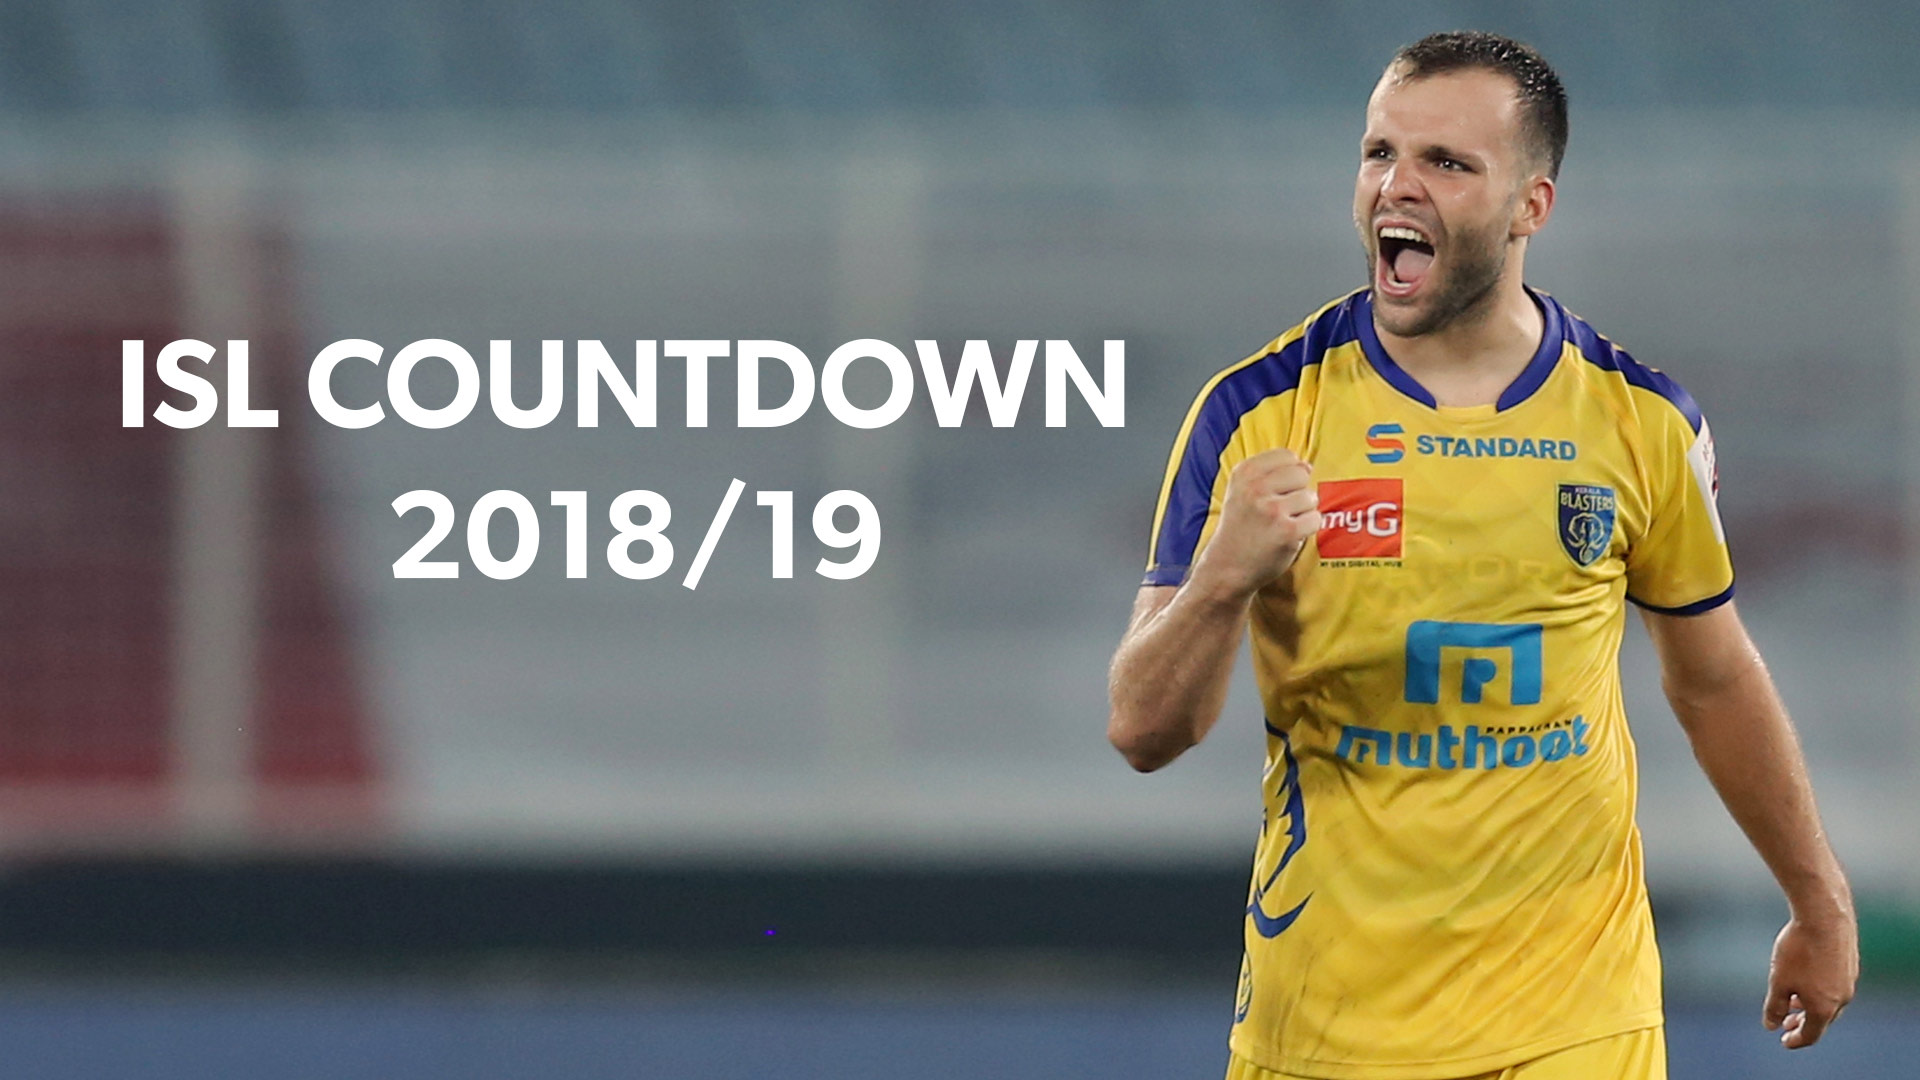 ISL Countdown 2018/19